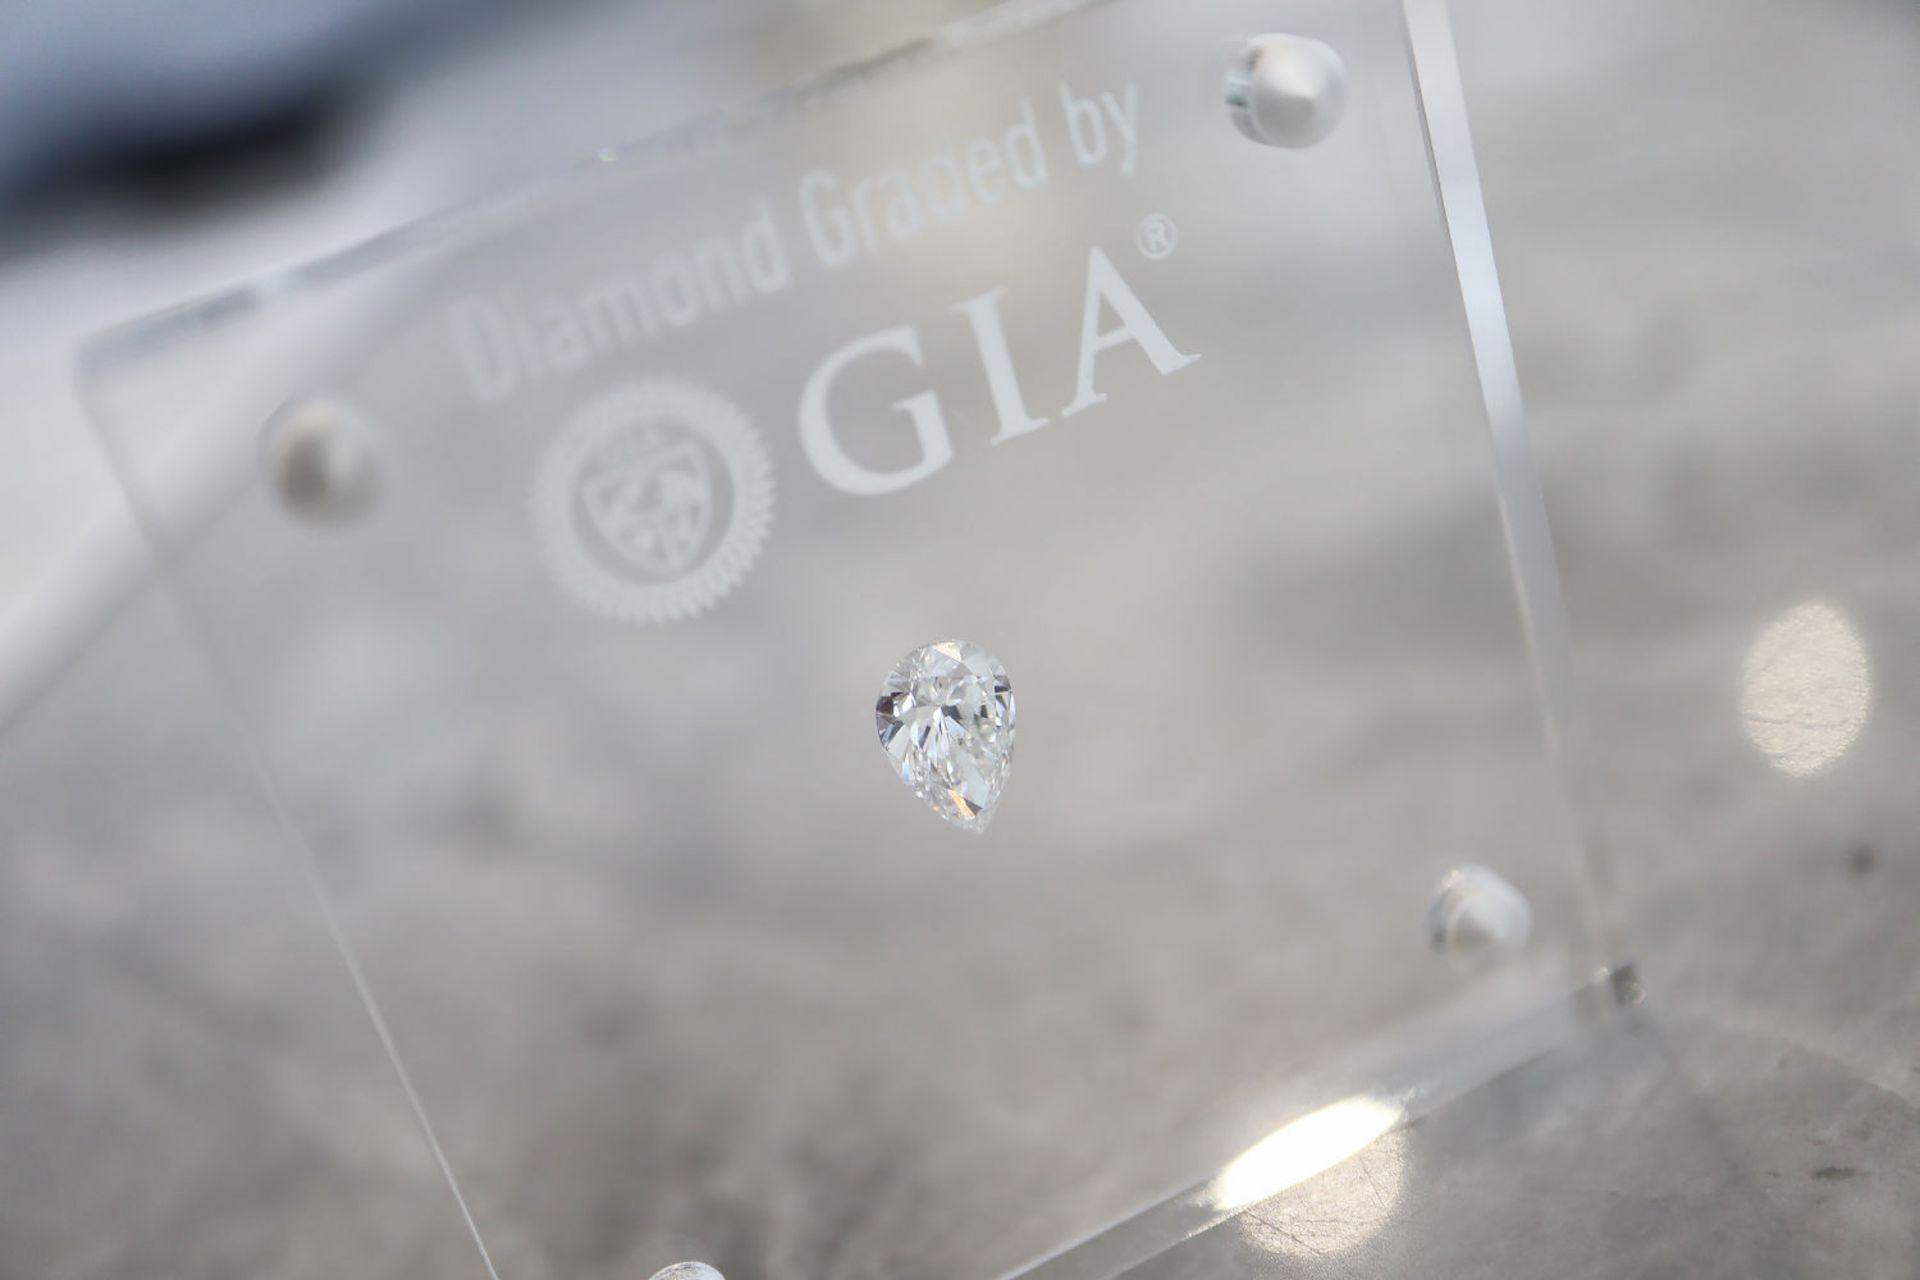 1.02CT DIAMOND; *GIA* CERTIFIED LOOSE PEAR CUT DIAMOND IN GIA CASE! - Image 6 of 9